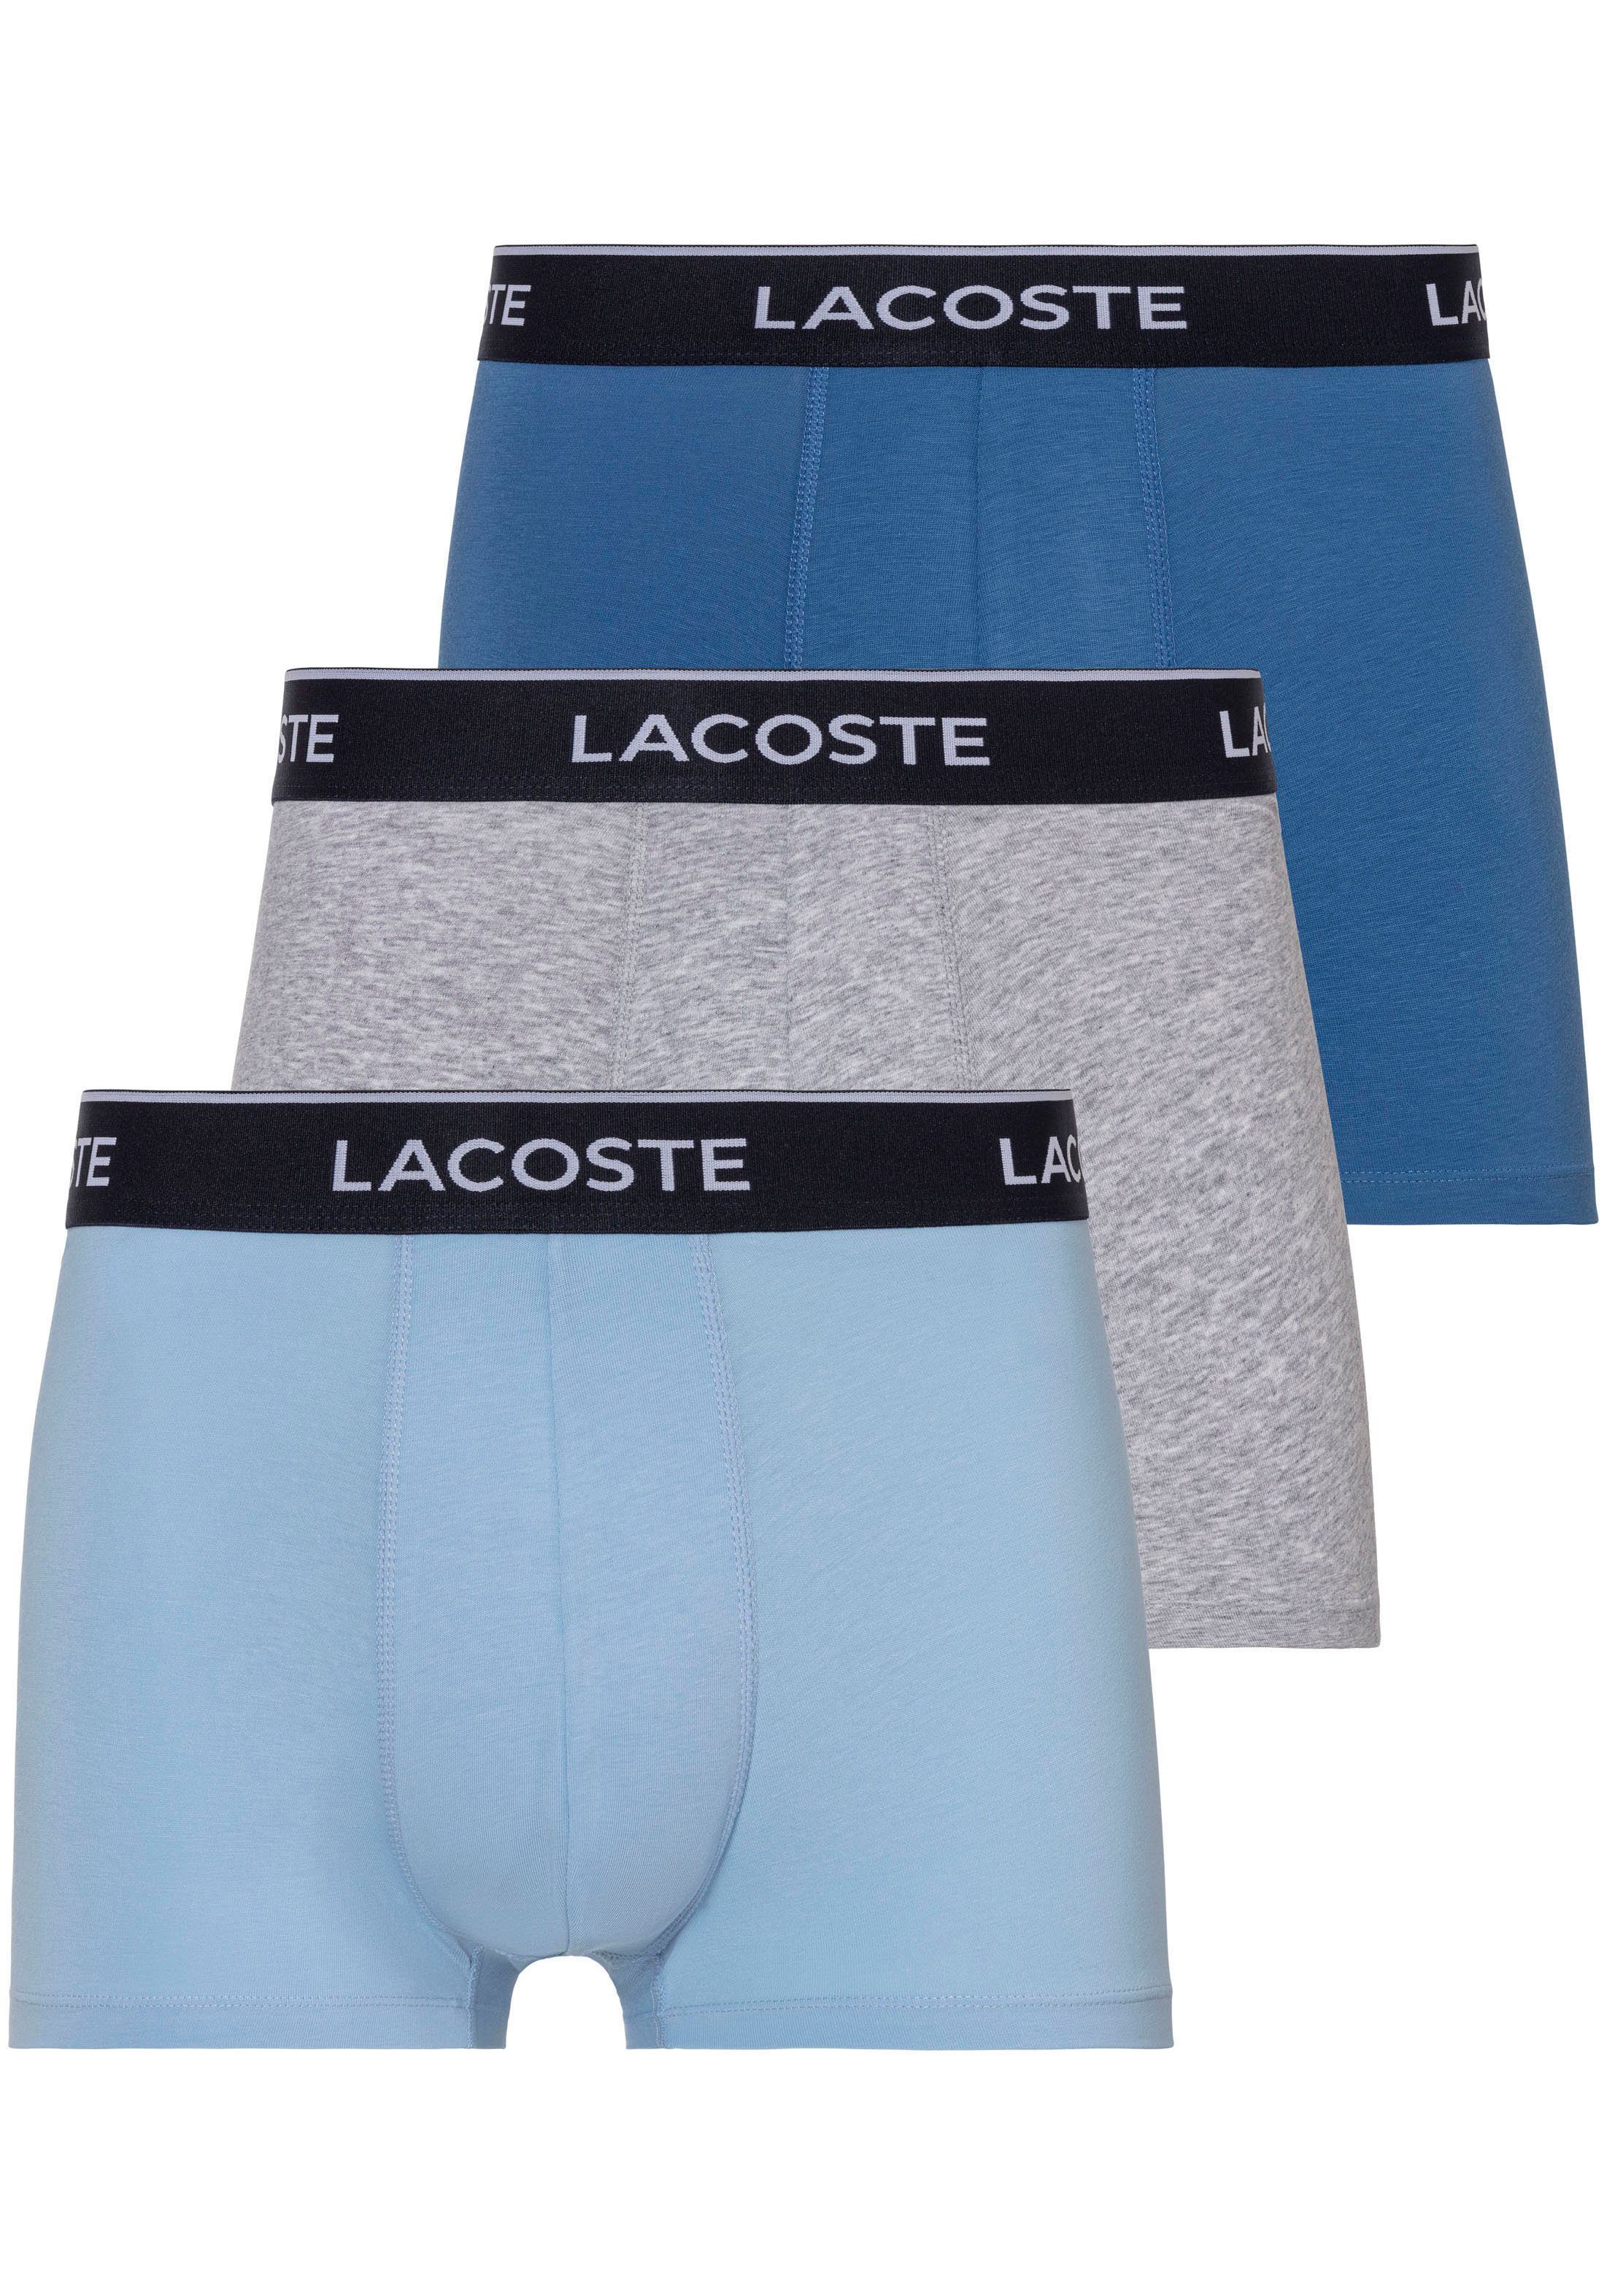 Lacoste Trunk eng Boxershorts Lacoste Herren Premium (Packung, 3-St., 3er-Pack) aus atmungsaktivem Material